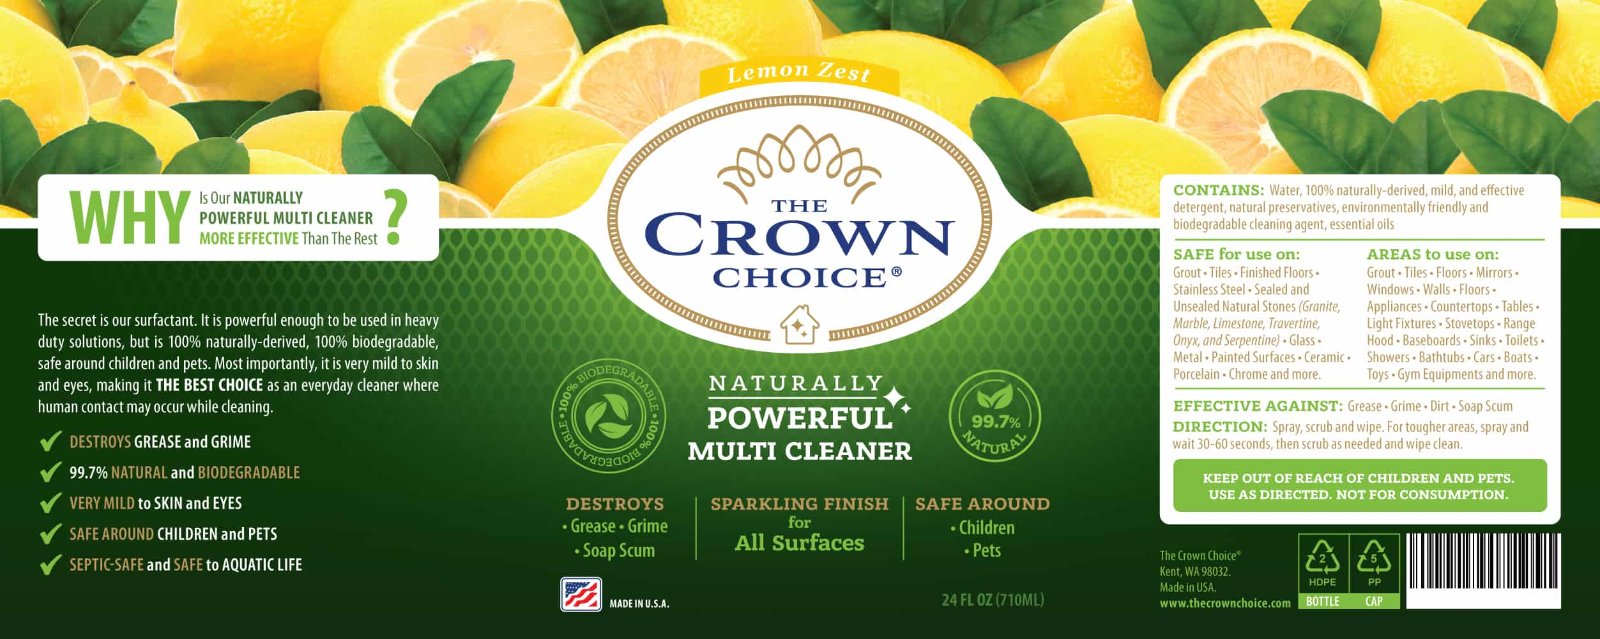 Natural Lemon Zest Multi Cleaner Spray – Essential Oil Lemon Zest Scent 10